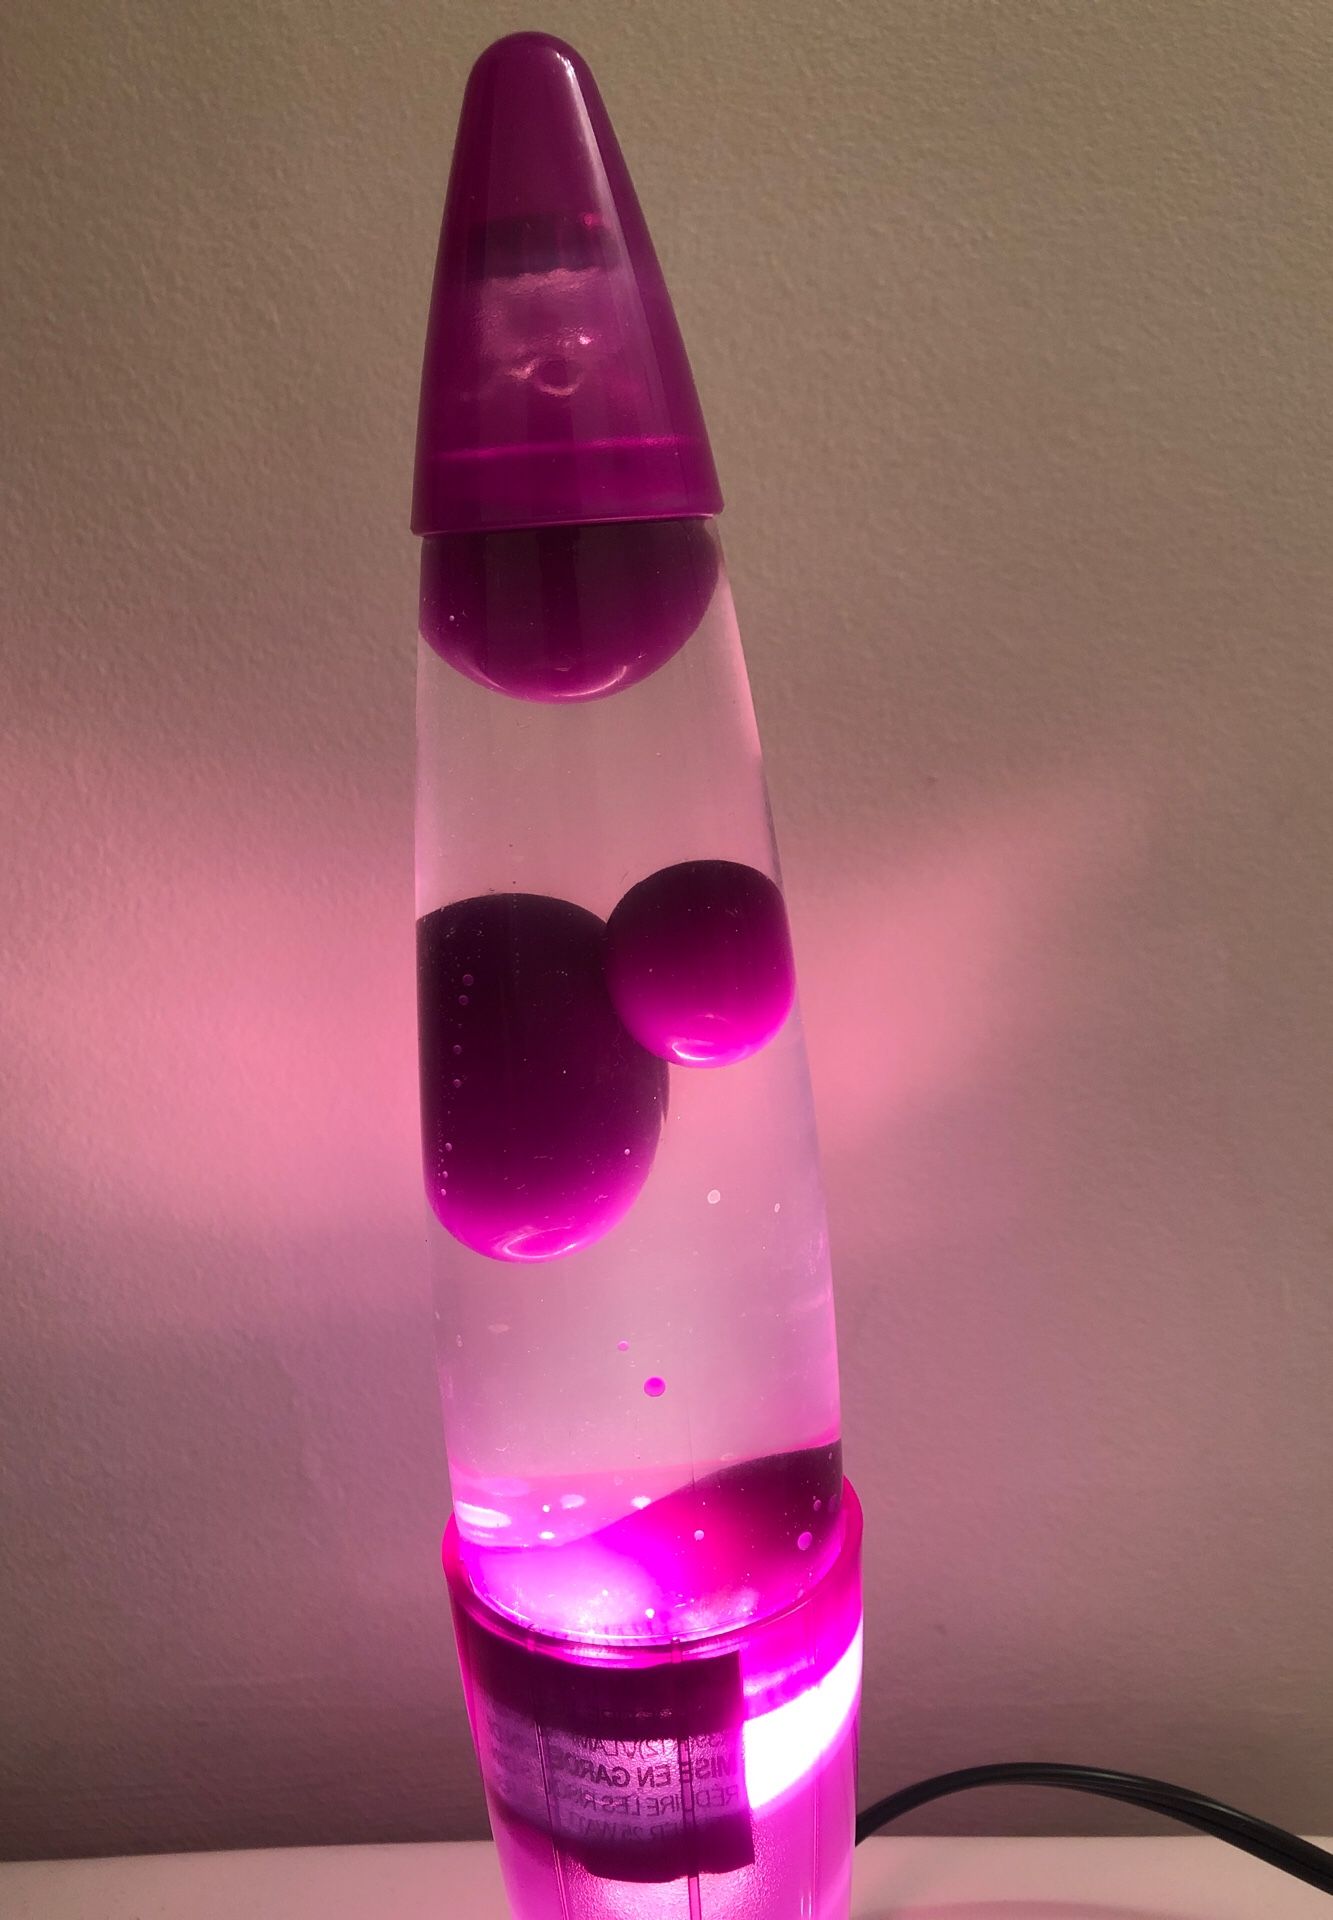 Purple Lava Lamp